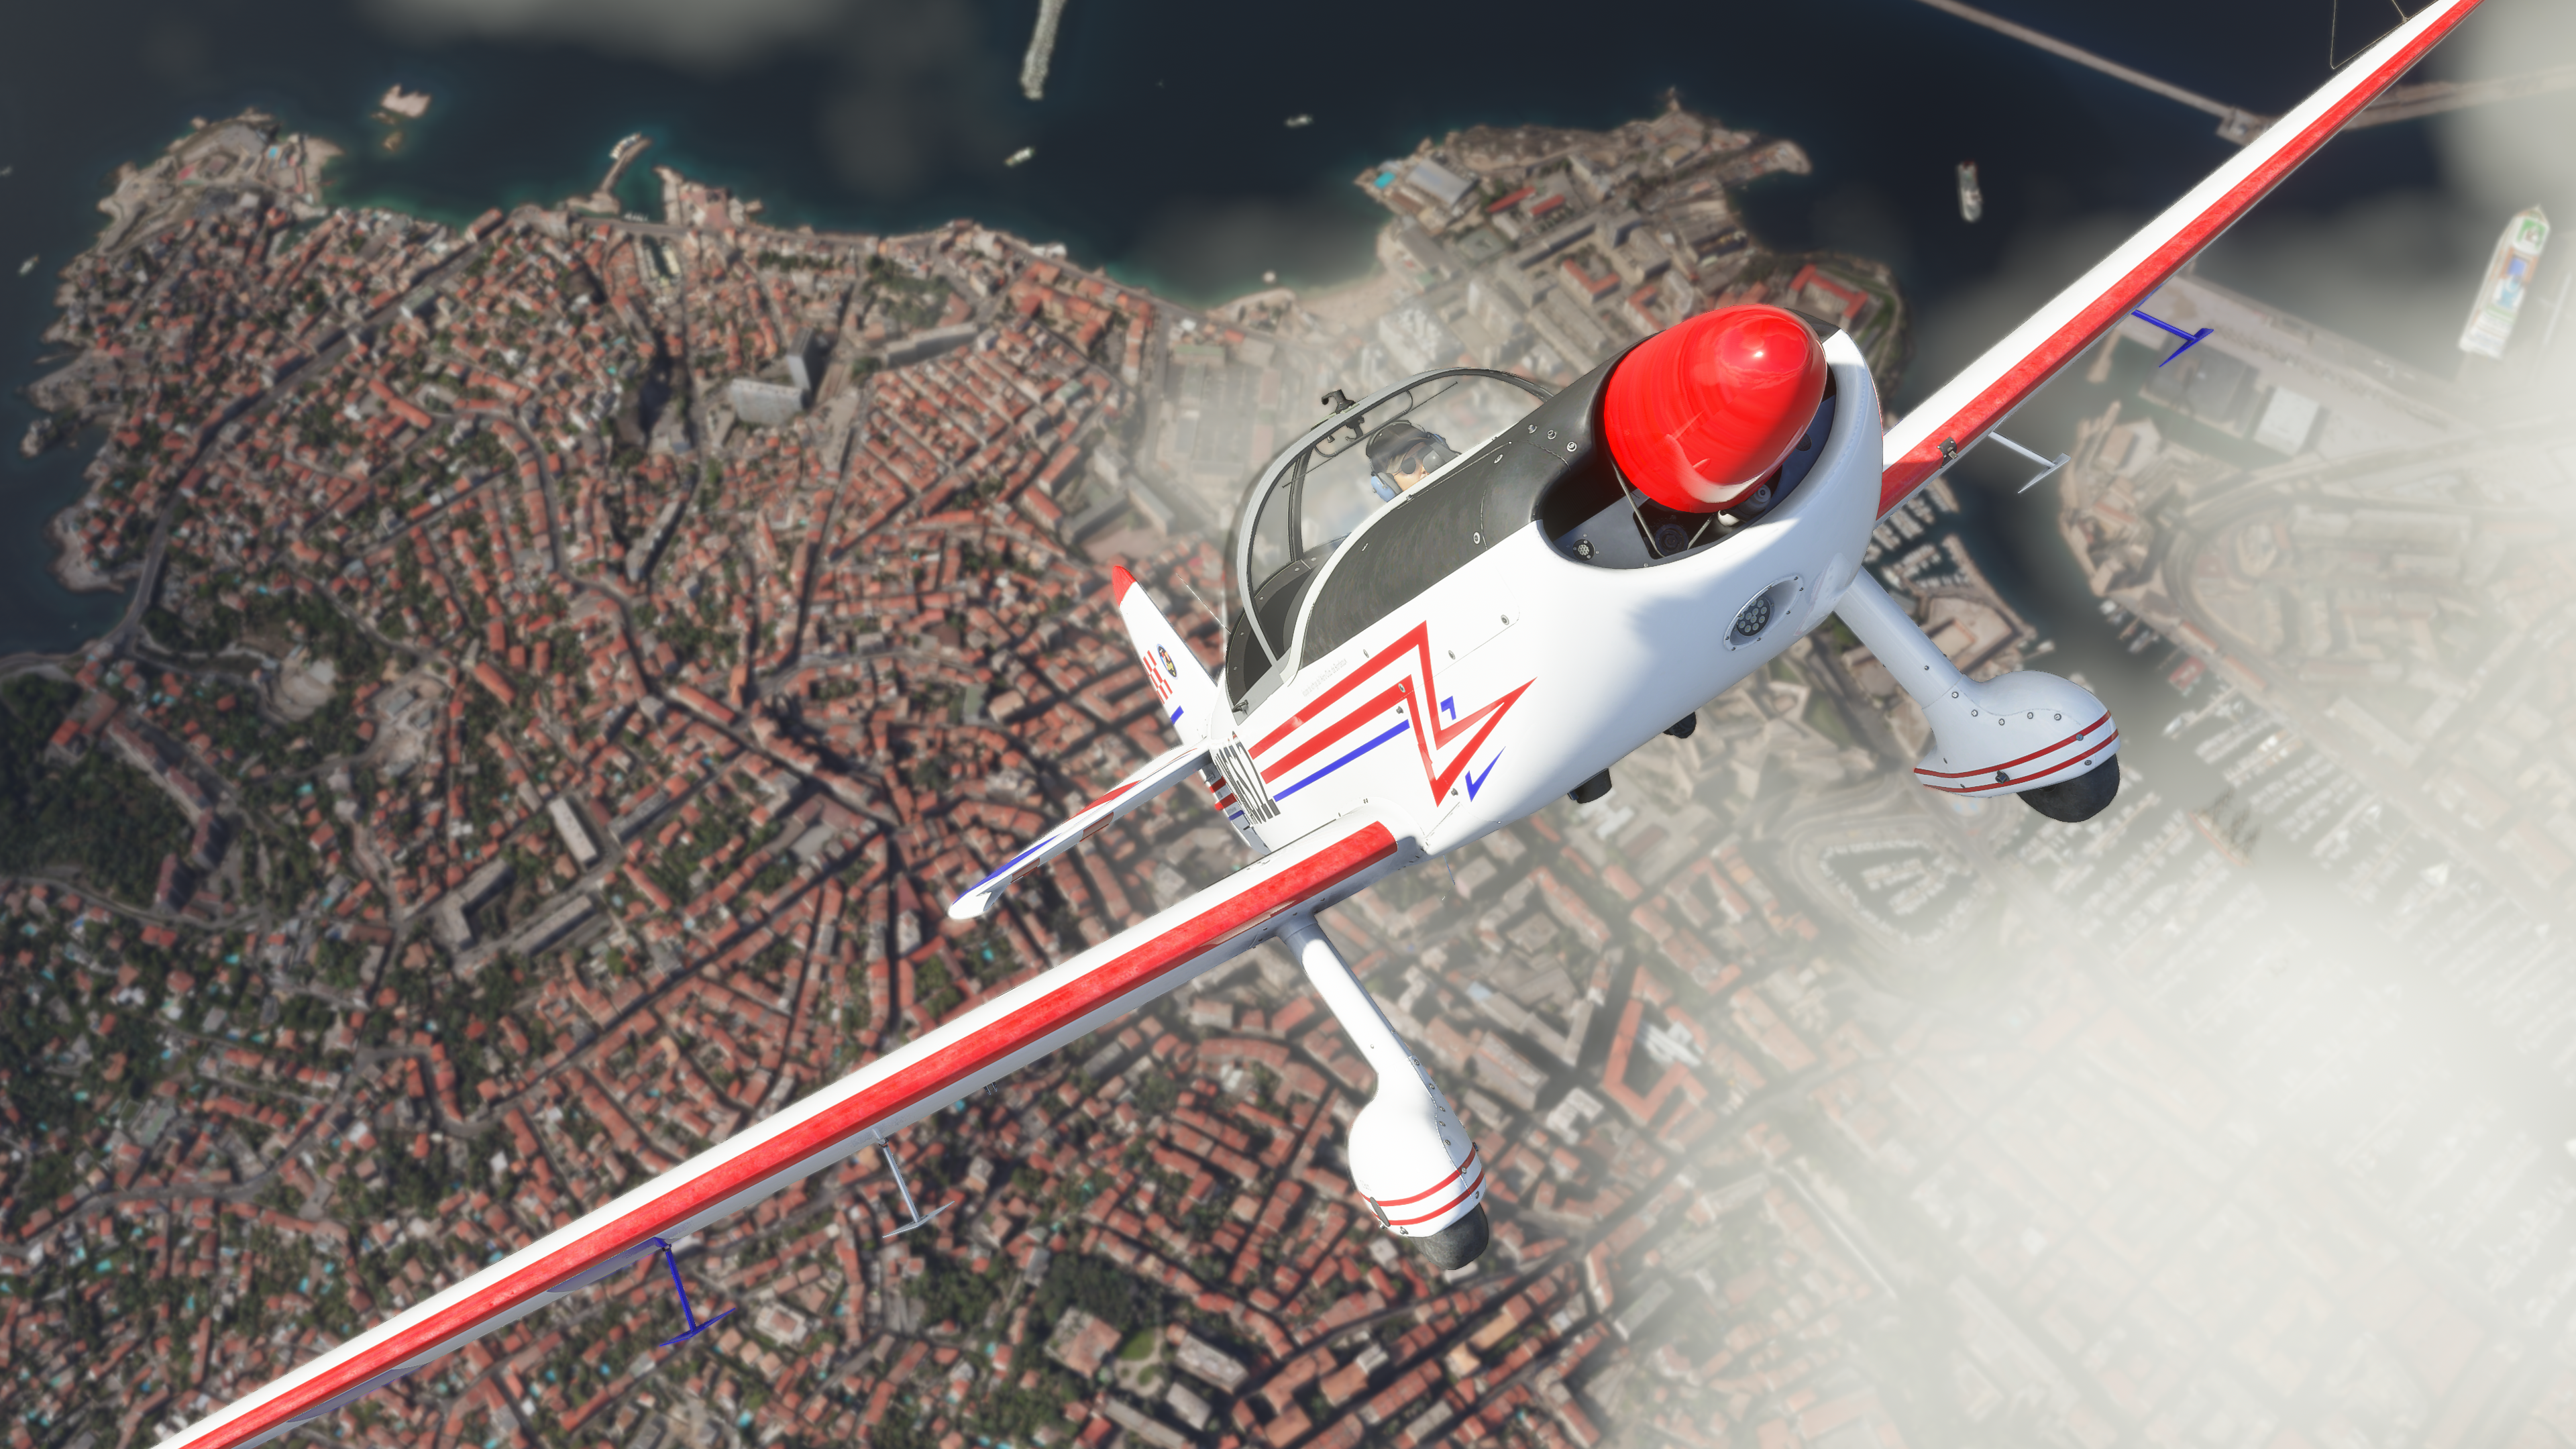 Airplane List In 4K  Microsoft Flight Simulator 2020 